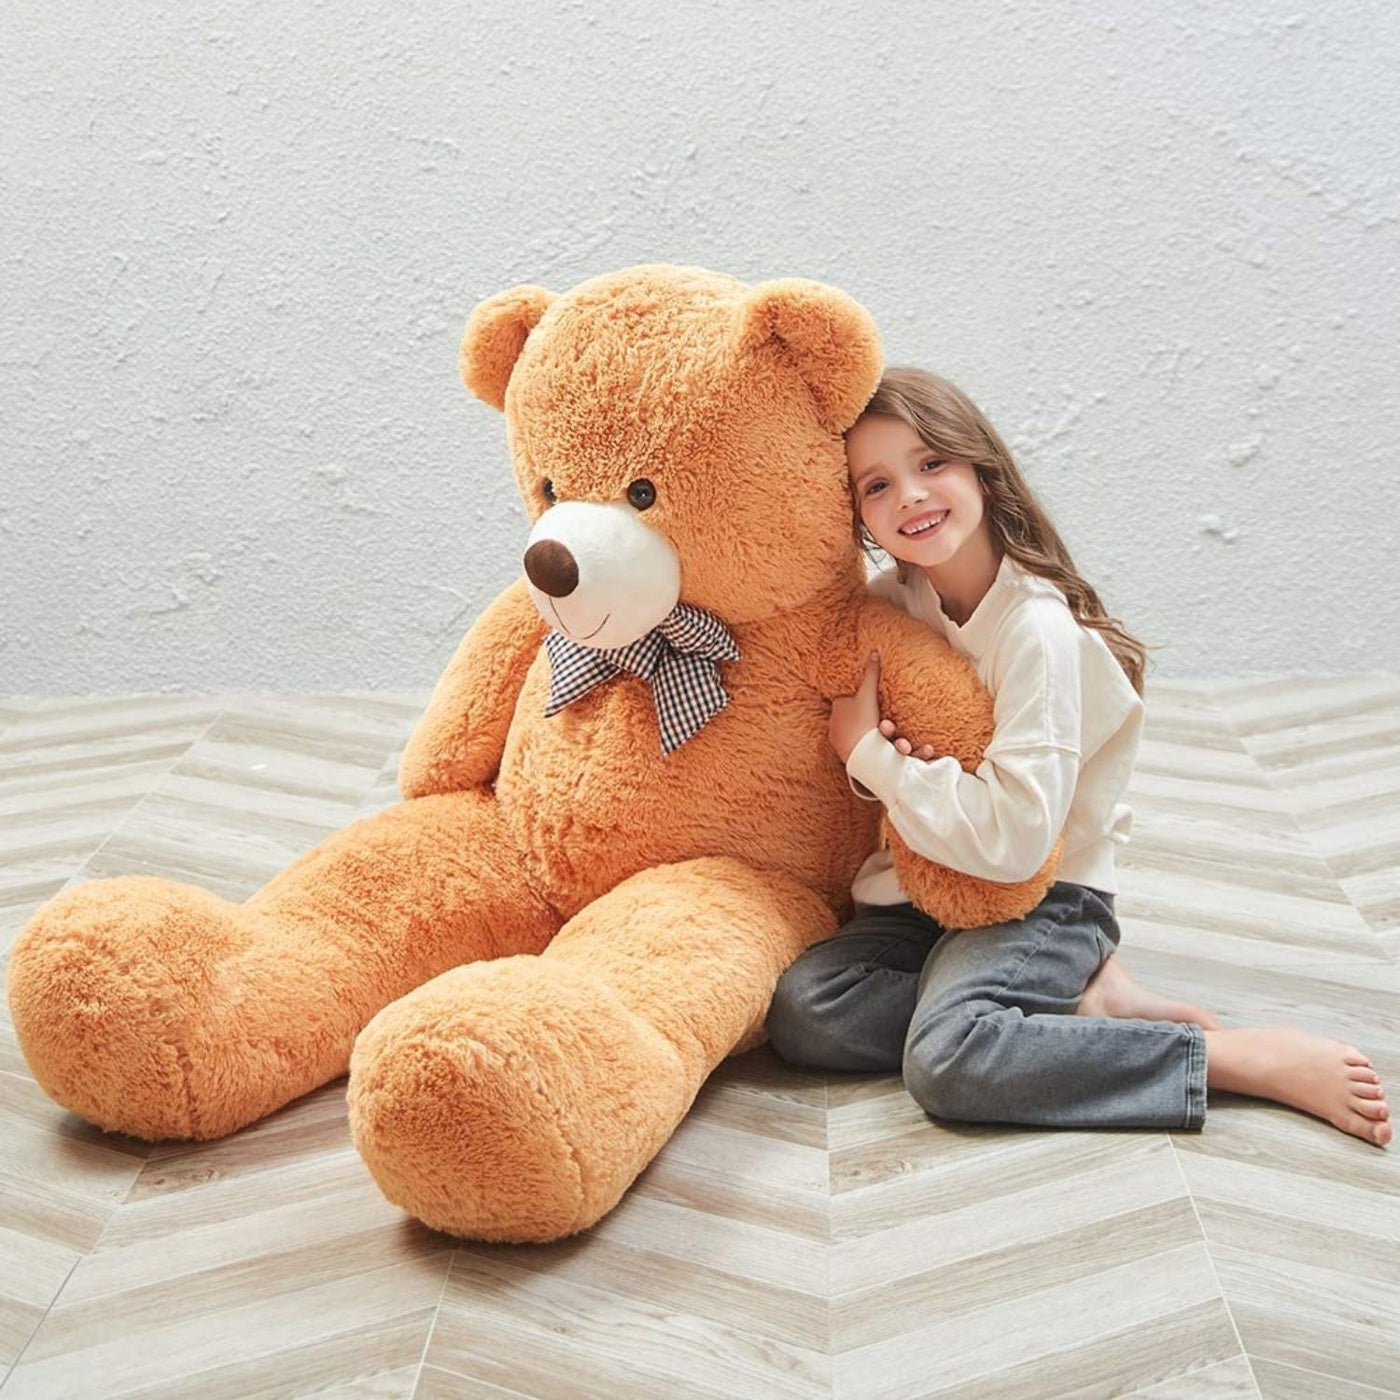 Giant Teddy Bear Plush Toy, Orange, 47 Inches